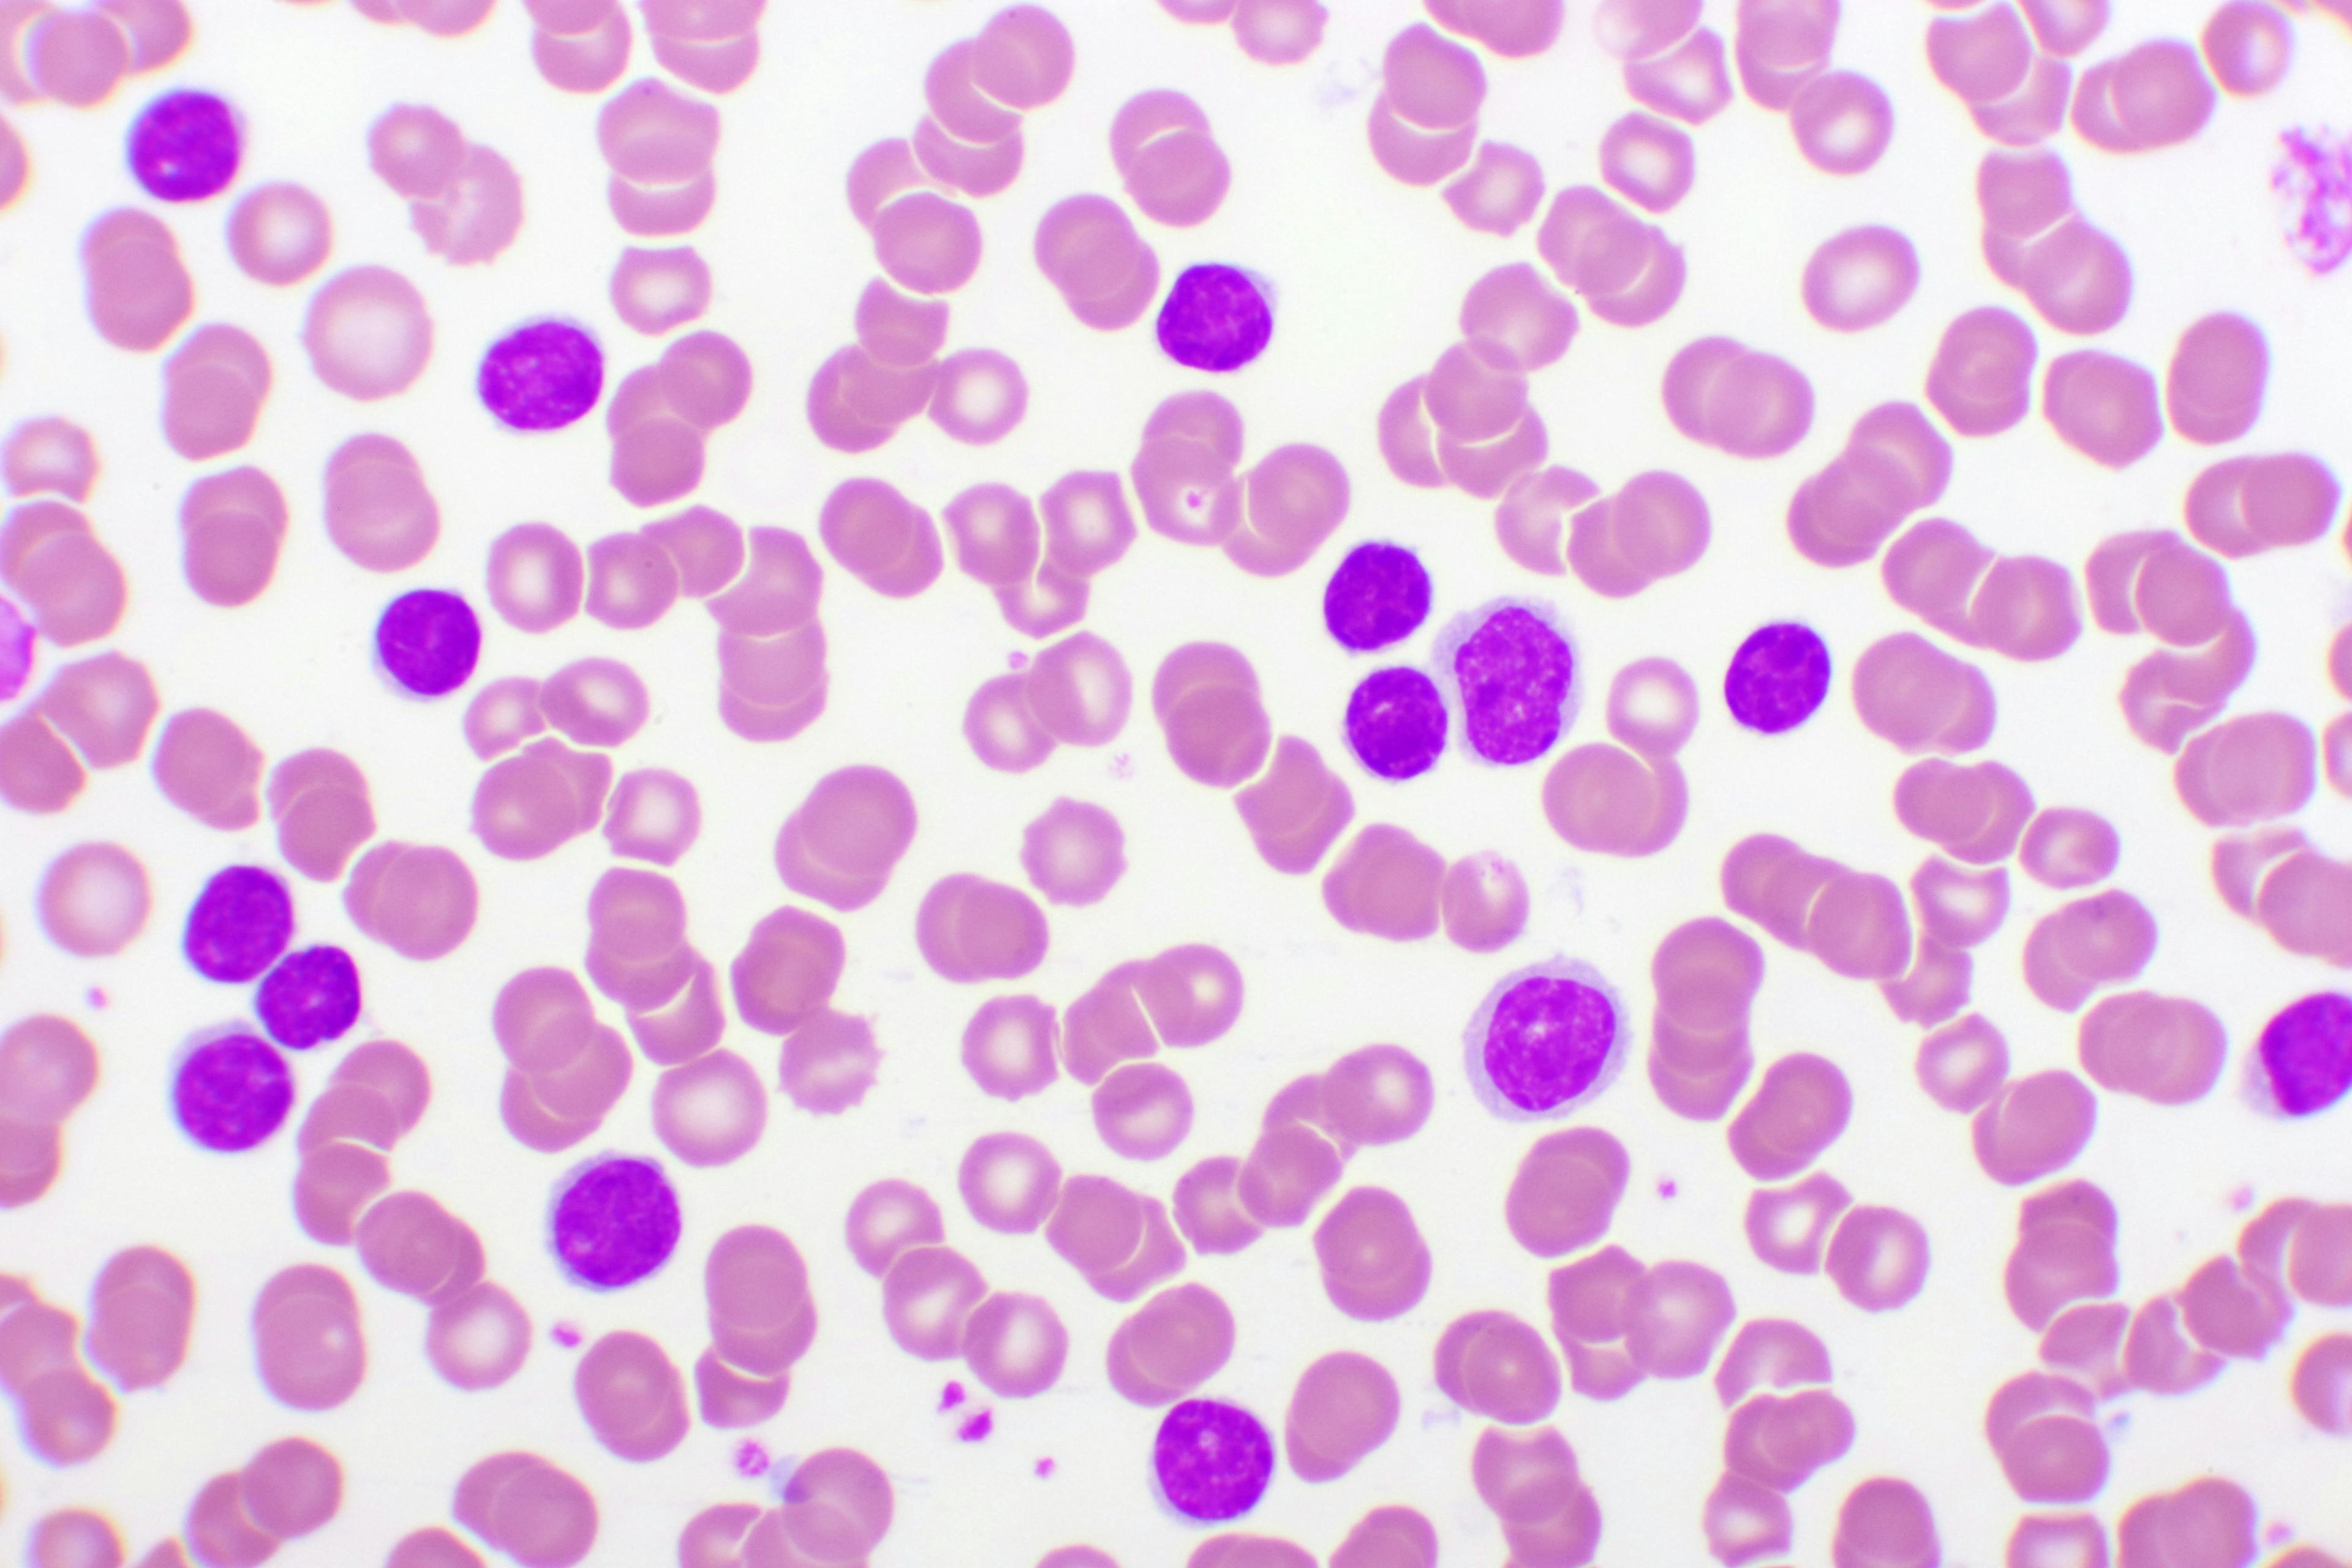 leukemia cells under a microscope